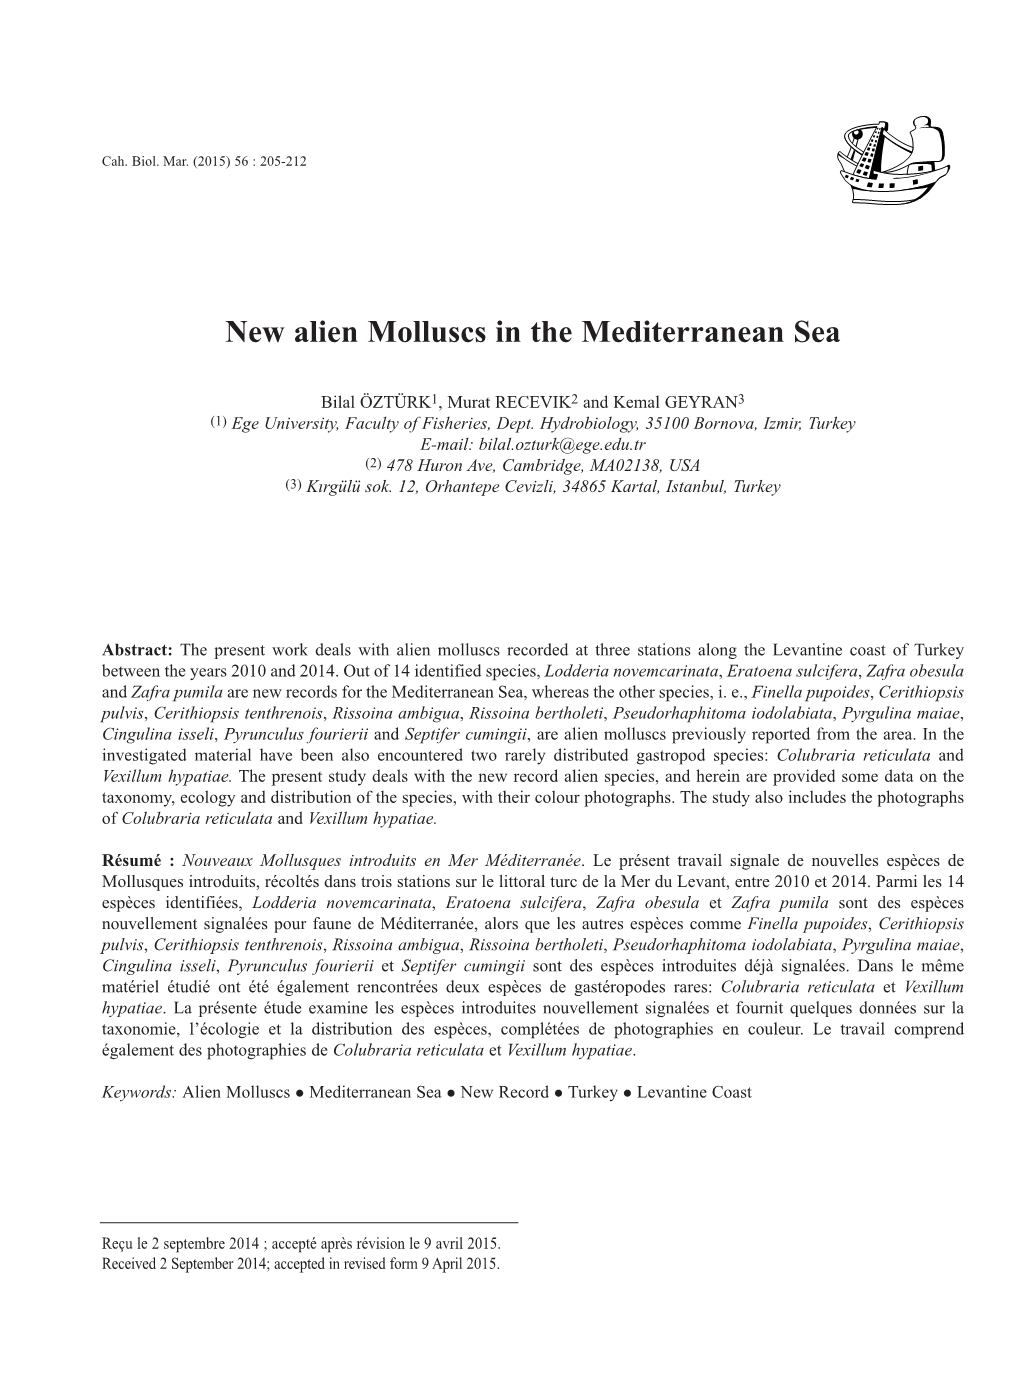 New Alien Molluscs in the Mediterranean Sea